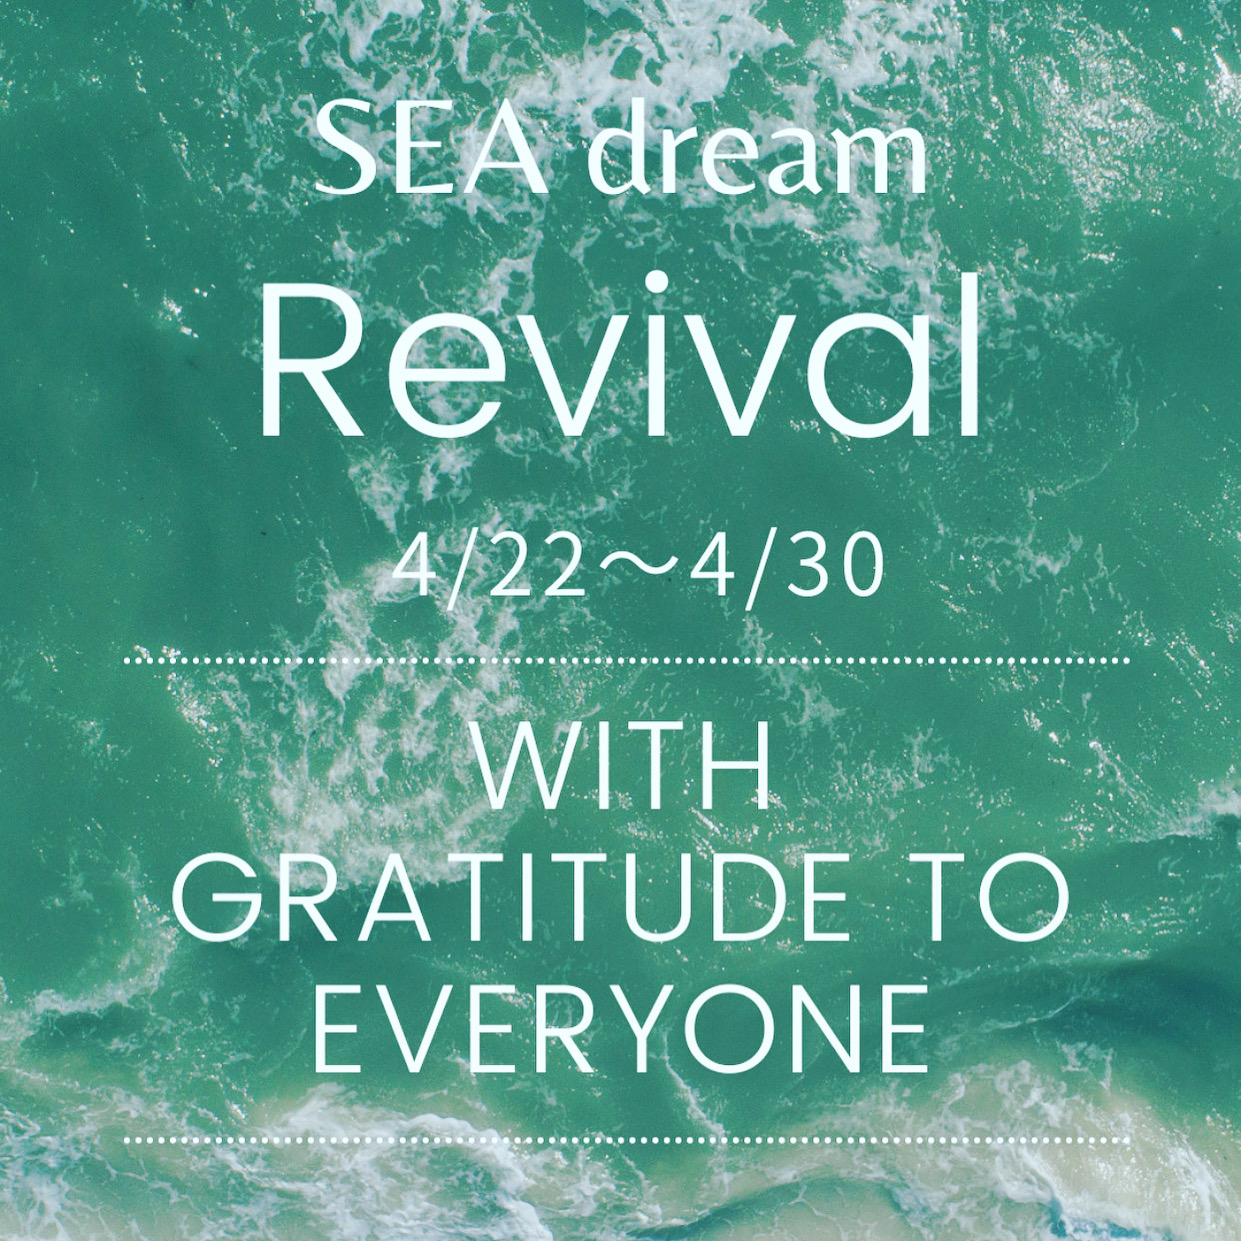 ◇SEA dream Revival◇